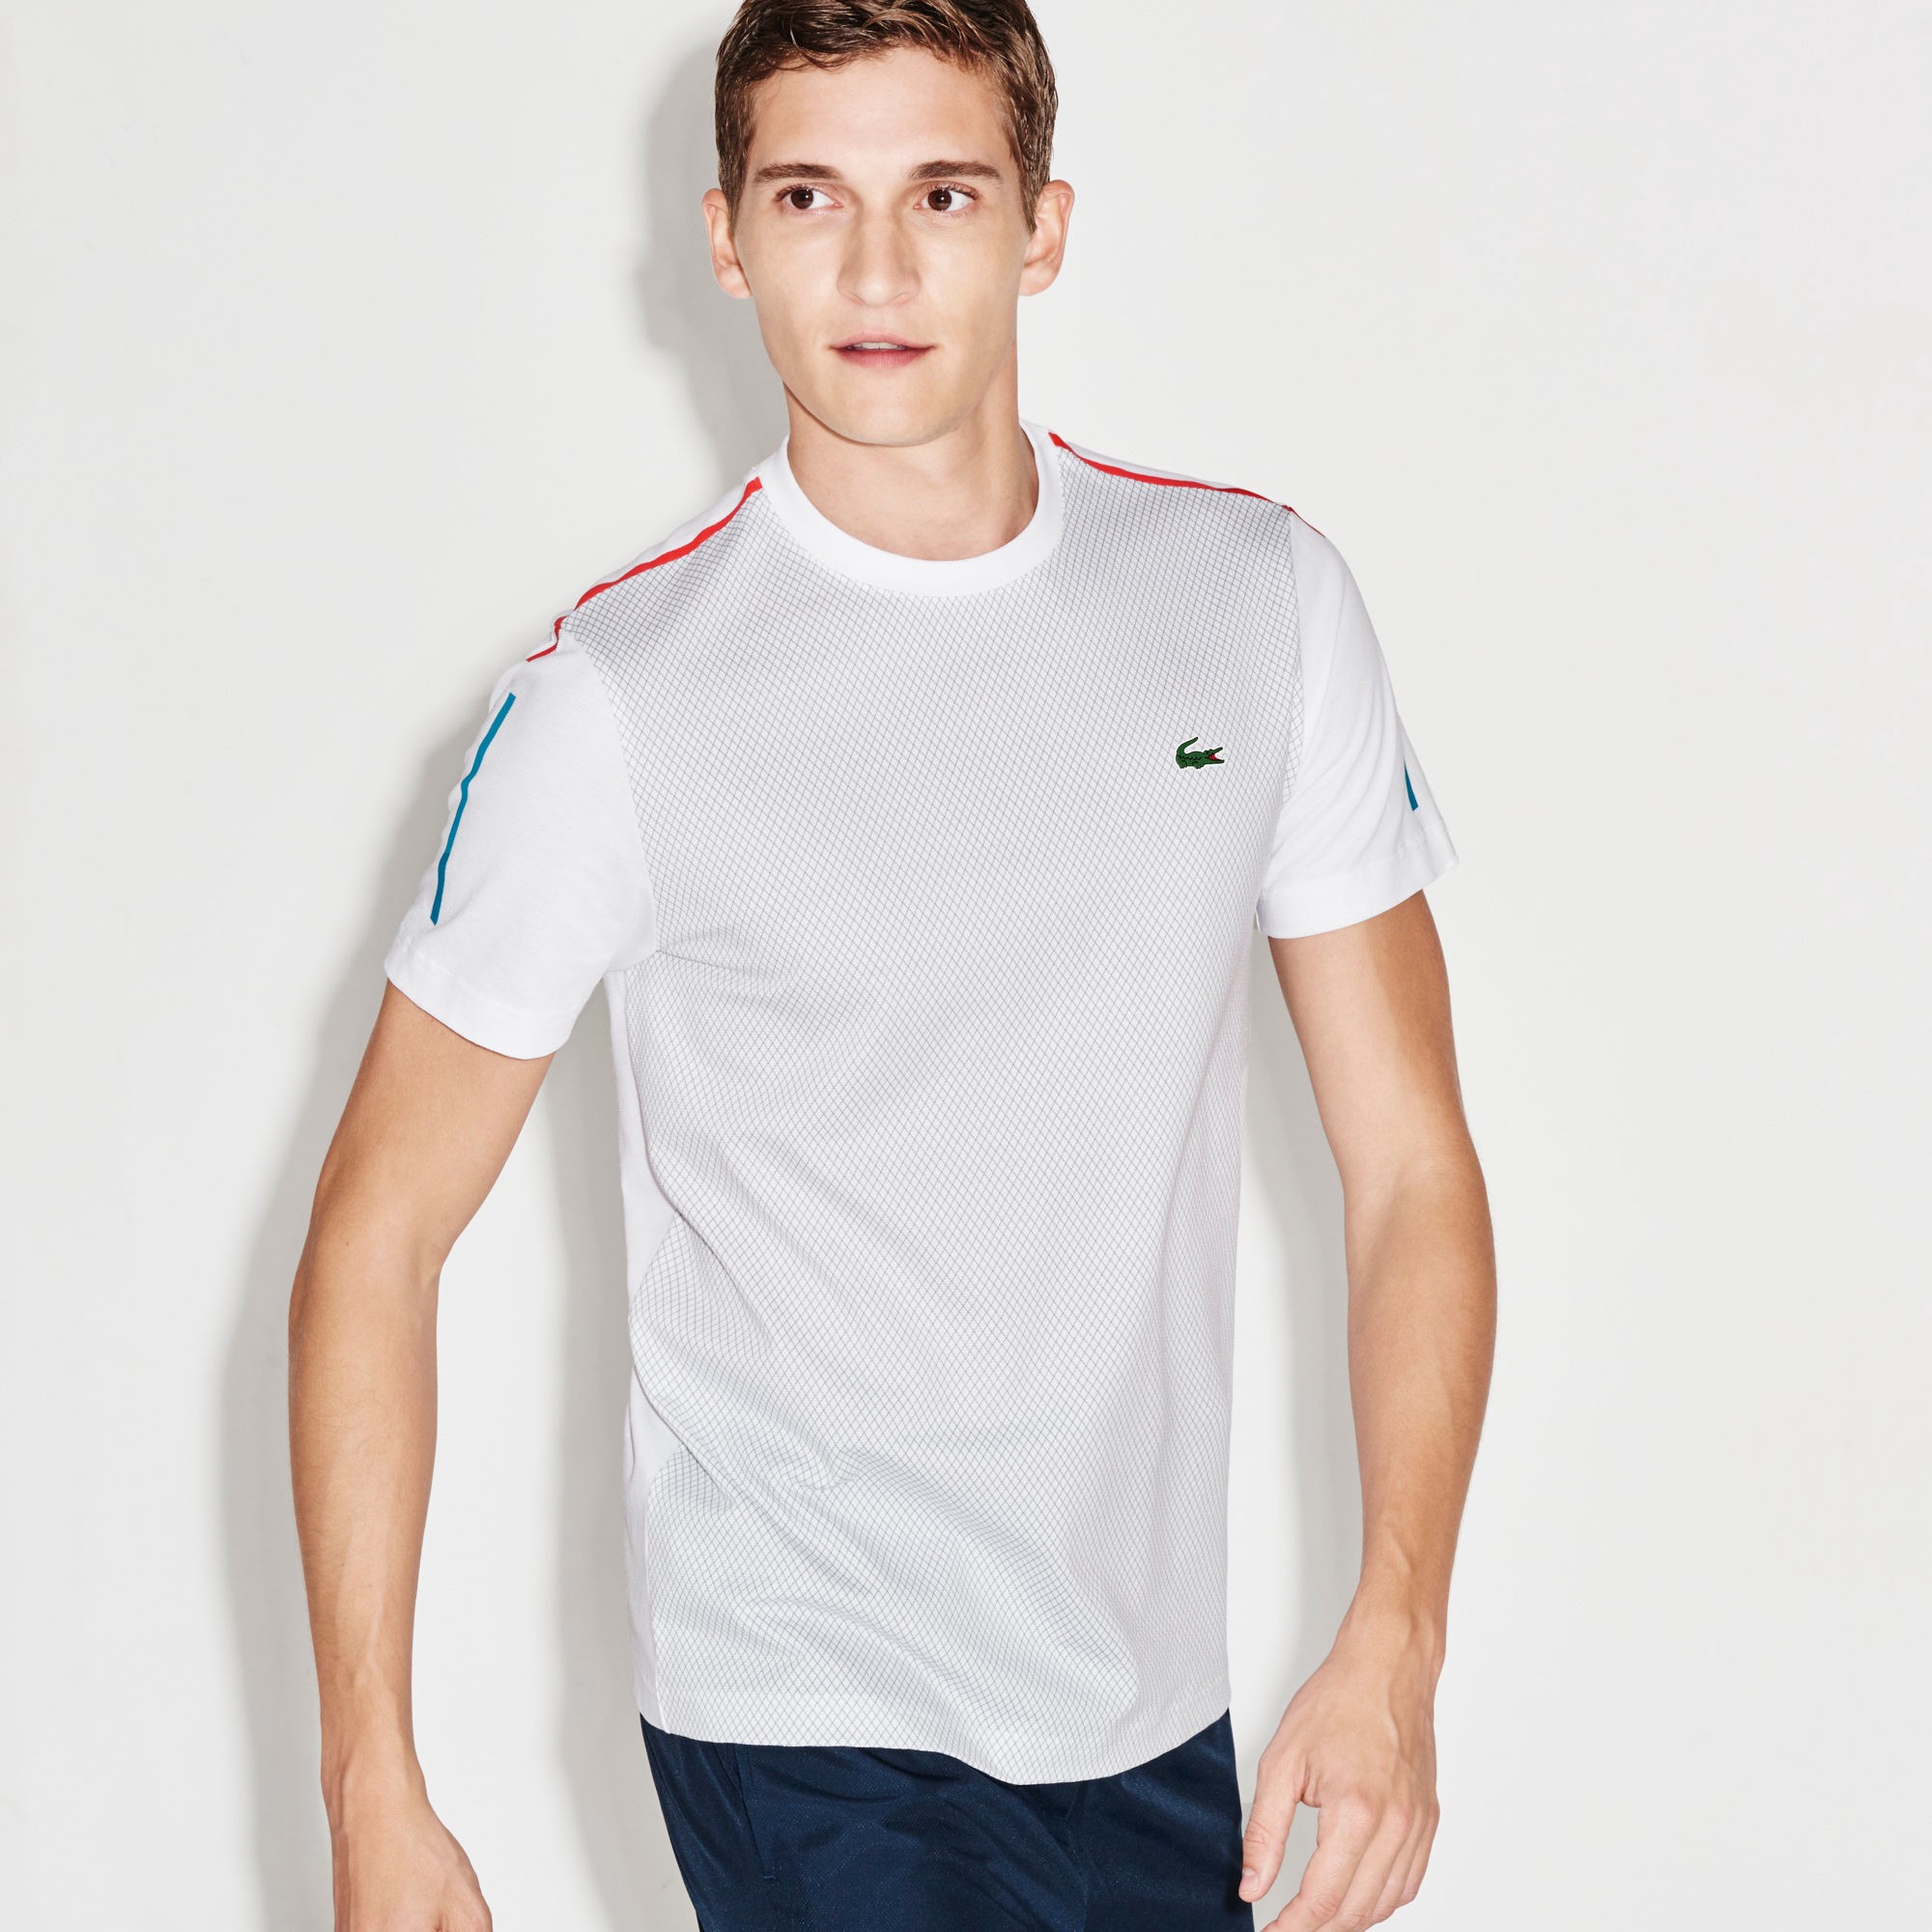 Lacoste Men's Sport Light Net Print Knit Crew Neck Tennis T-shirt ...